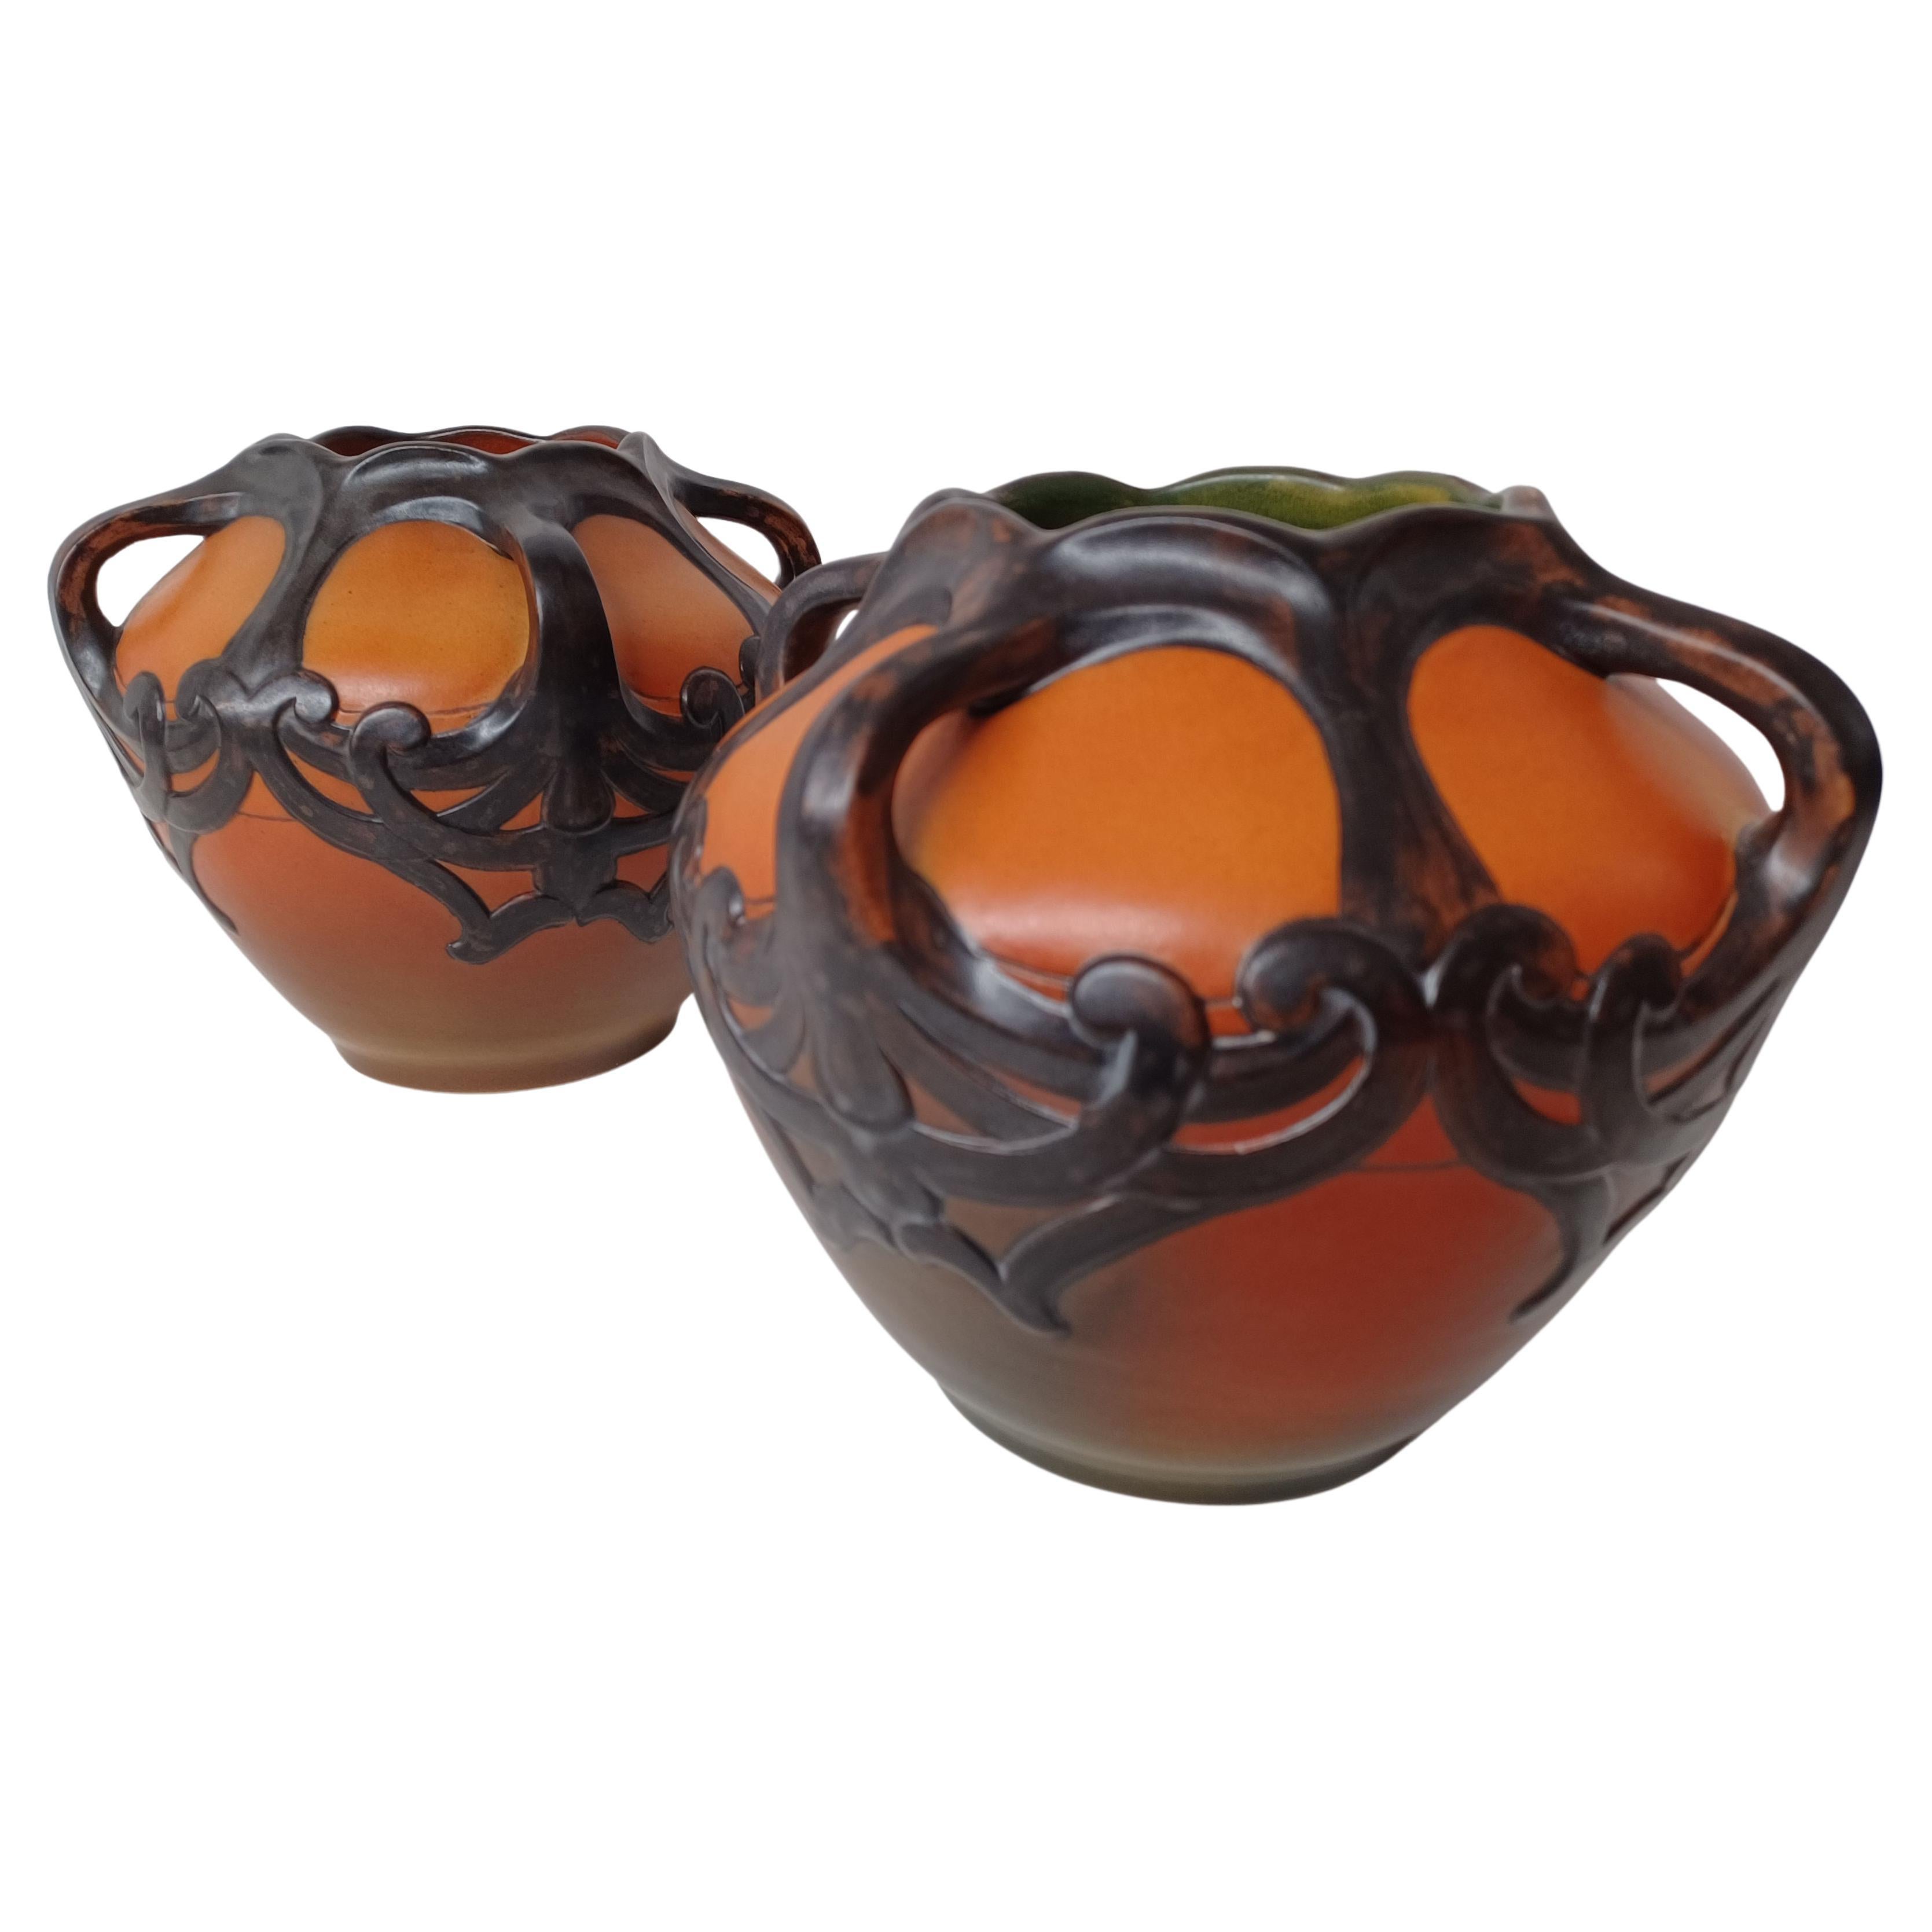 1900s Two Karen Hagen Hand-Crafted Danish Art Nouveau Vases by P. Ipsens Enke For Sale